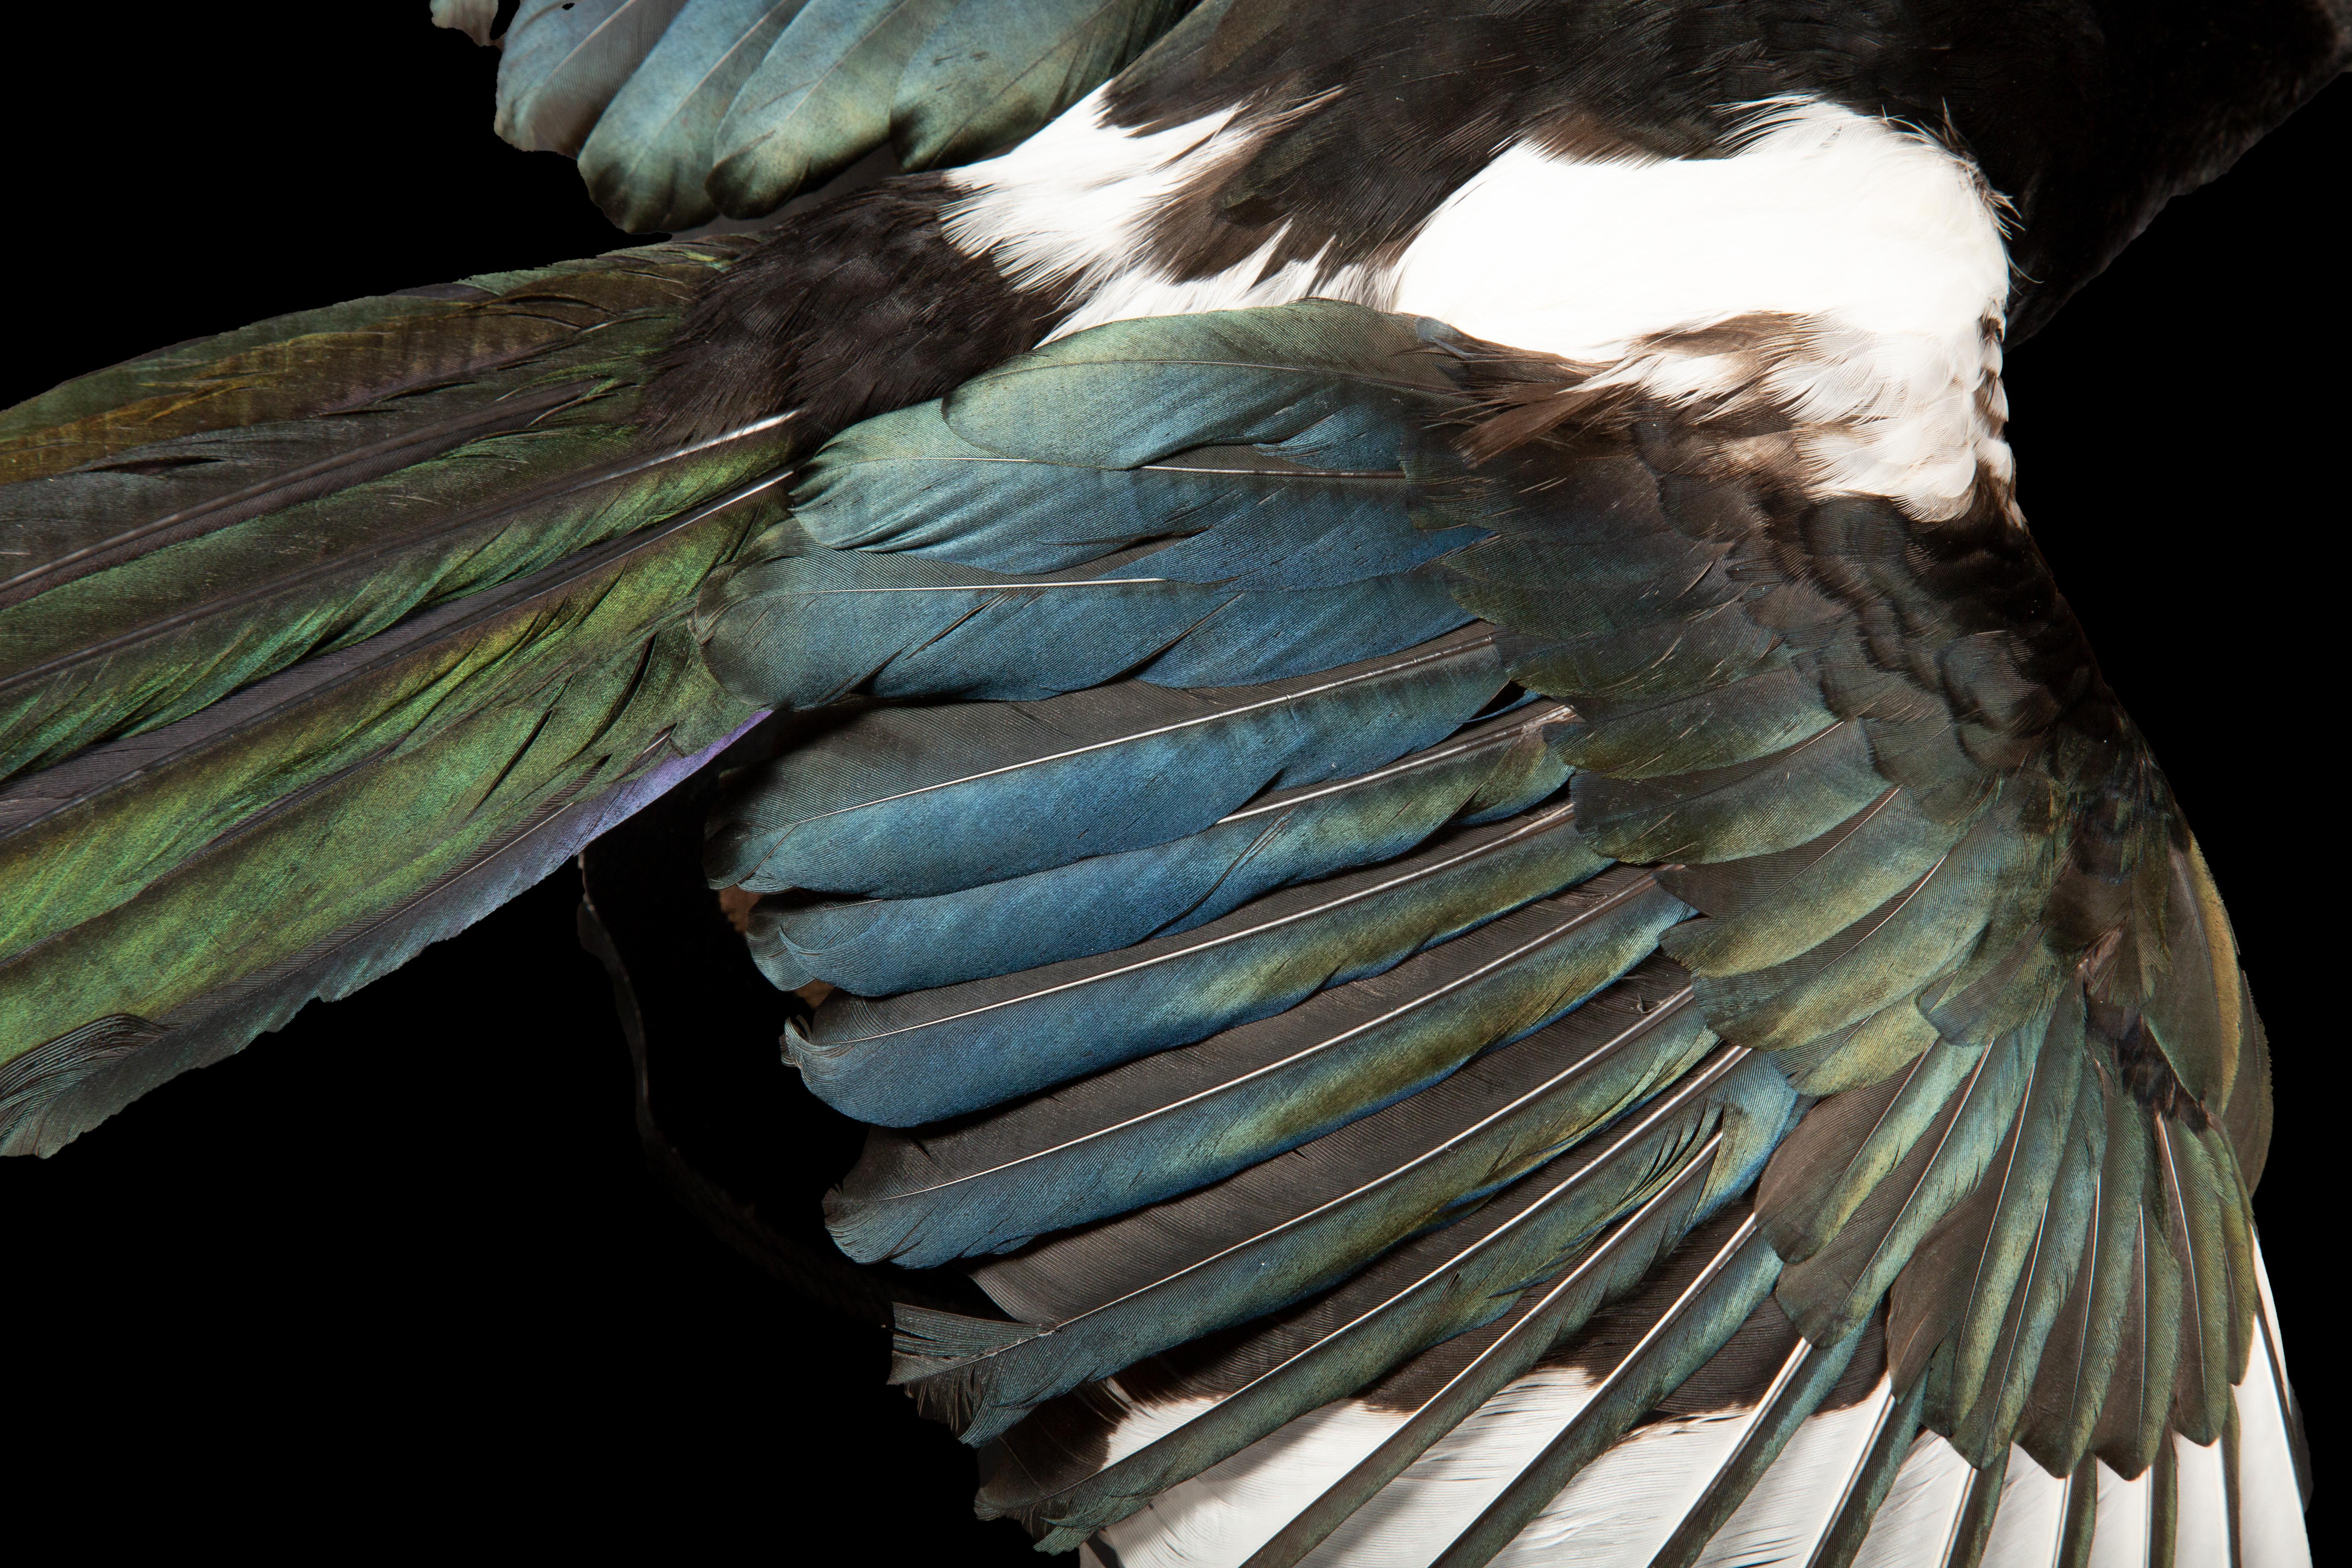 Ukrainian Exquisite Taxidermy: The Eurasian Magpie - A Captivating Avian Specimen